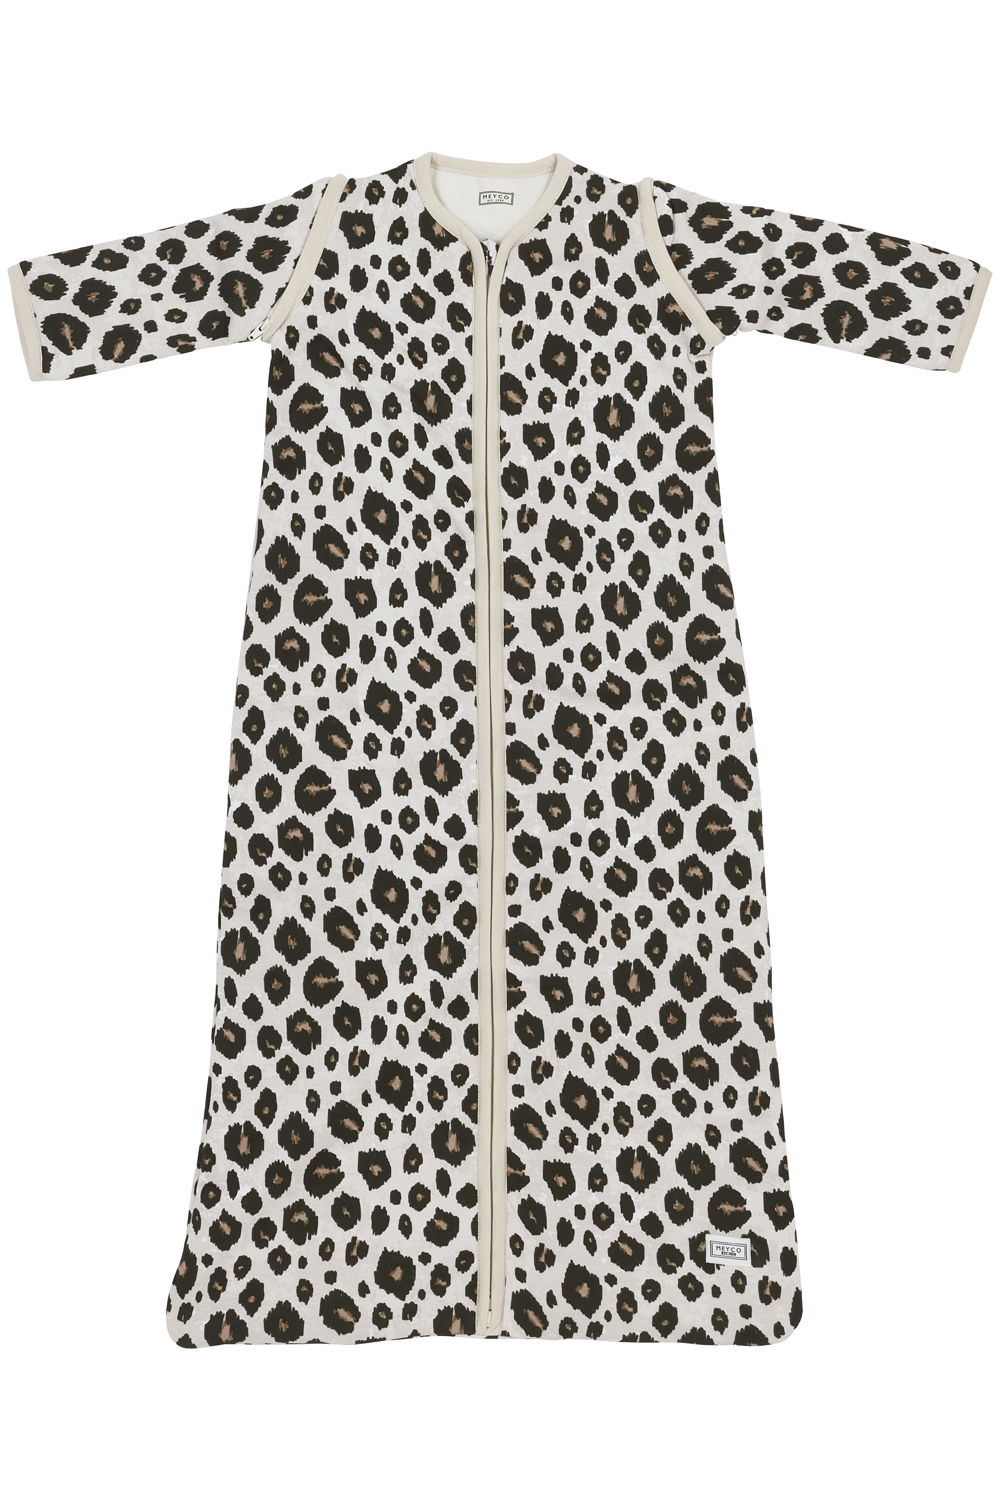 Baby Sleeping bag detachable sleeve lined Leopard - Sand Melange - 70cm